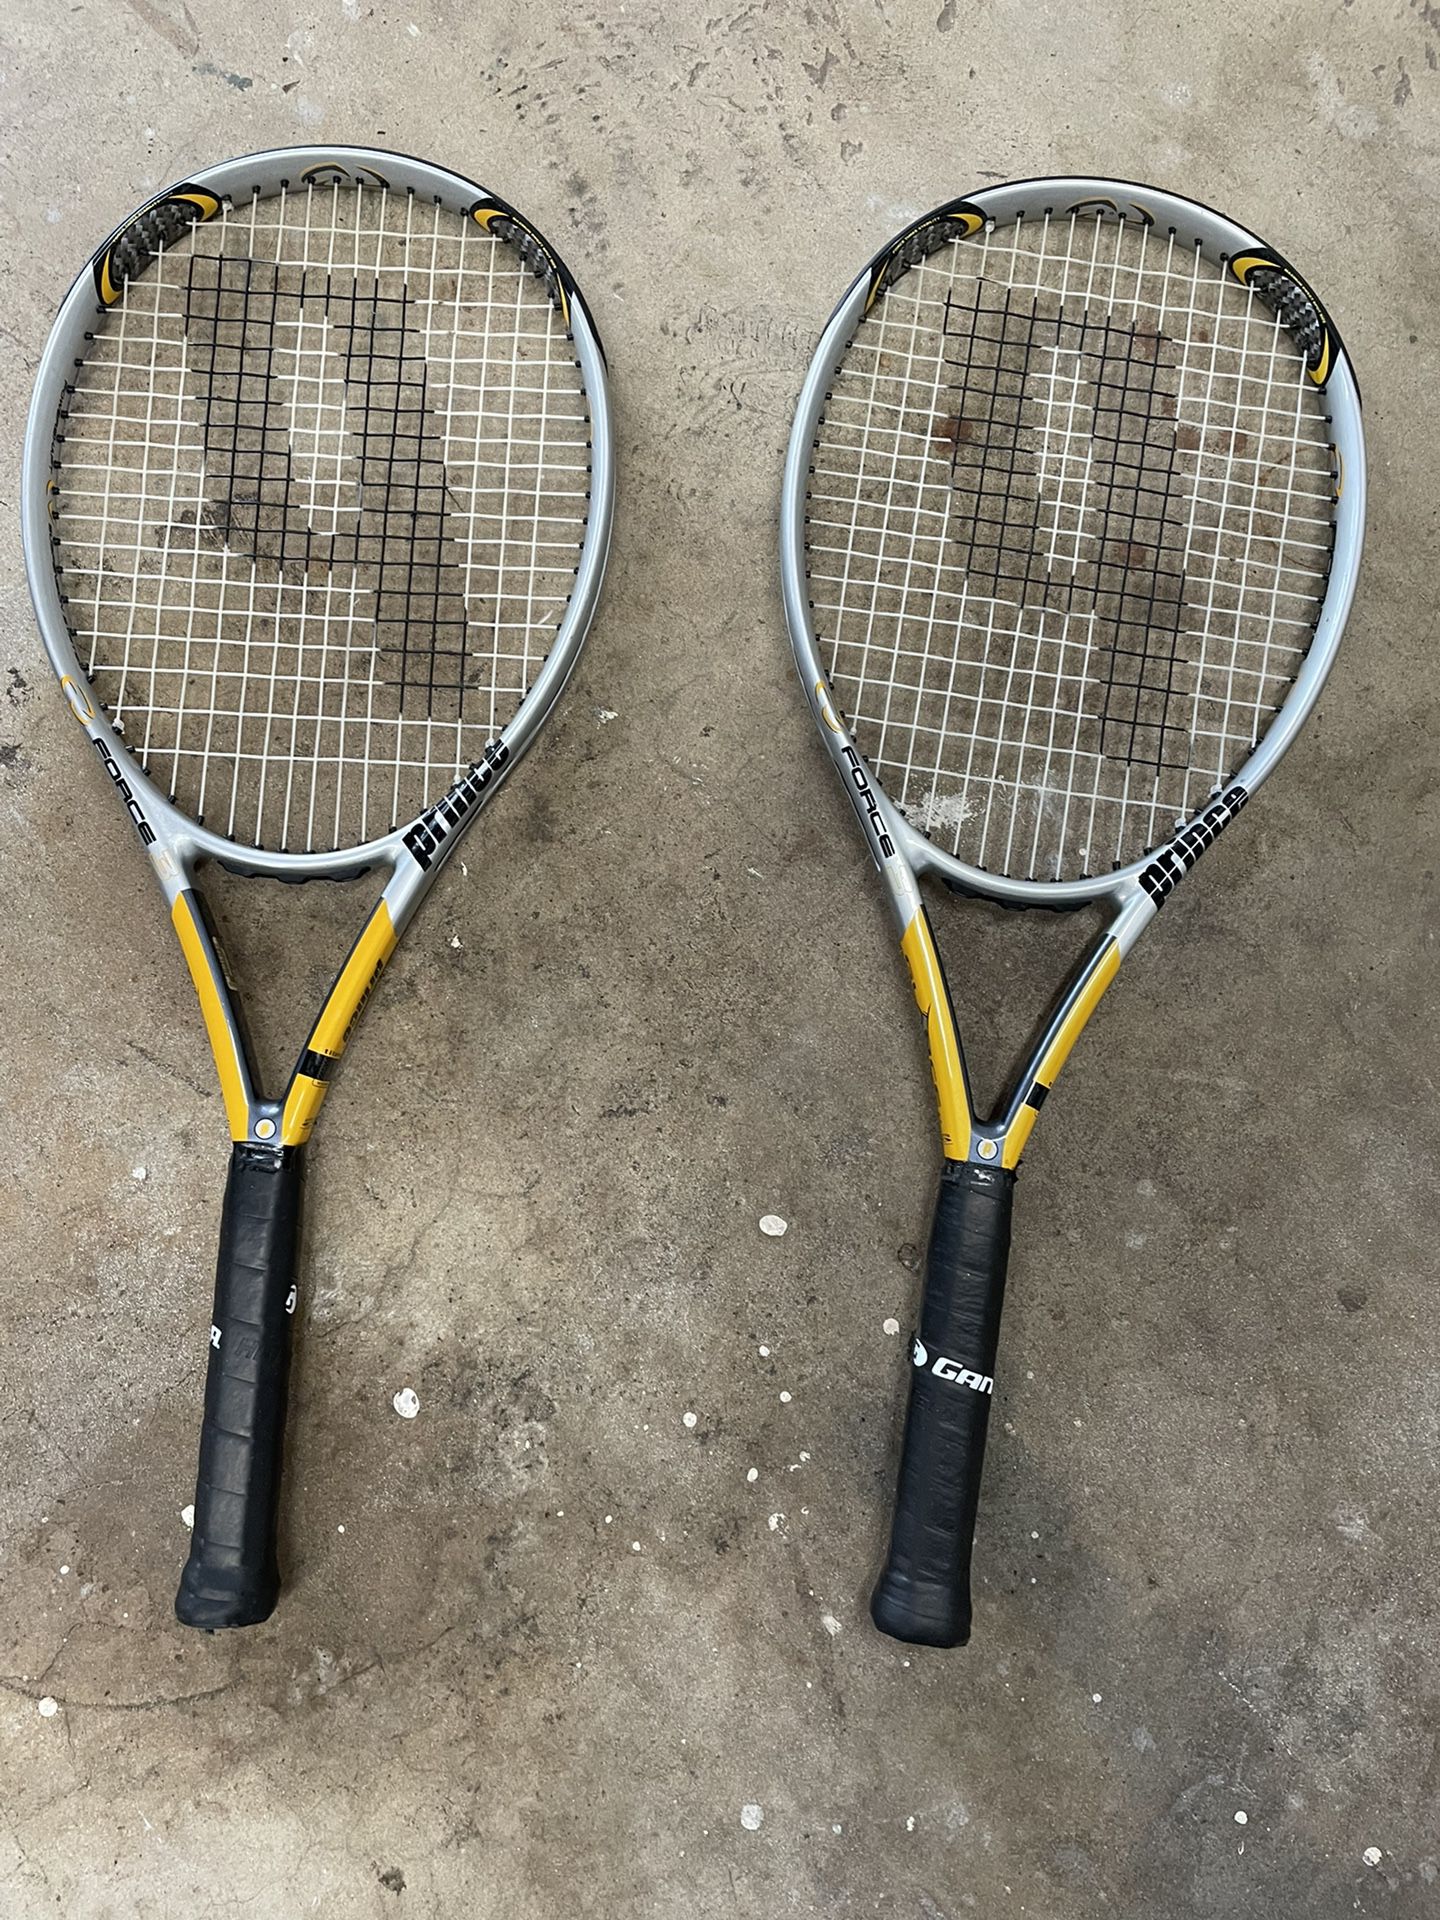 2 Prince Tennis Racket $100